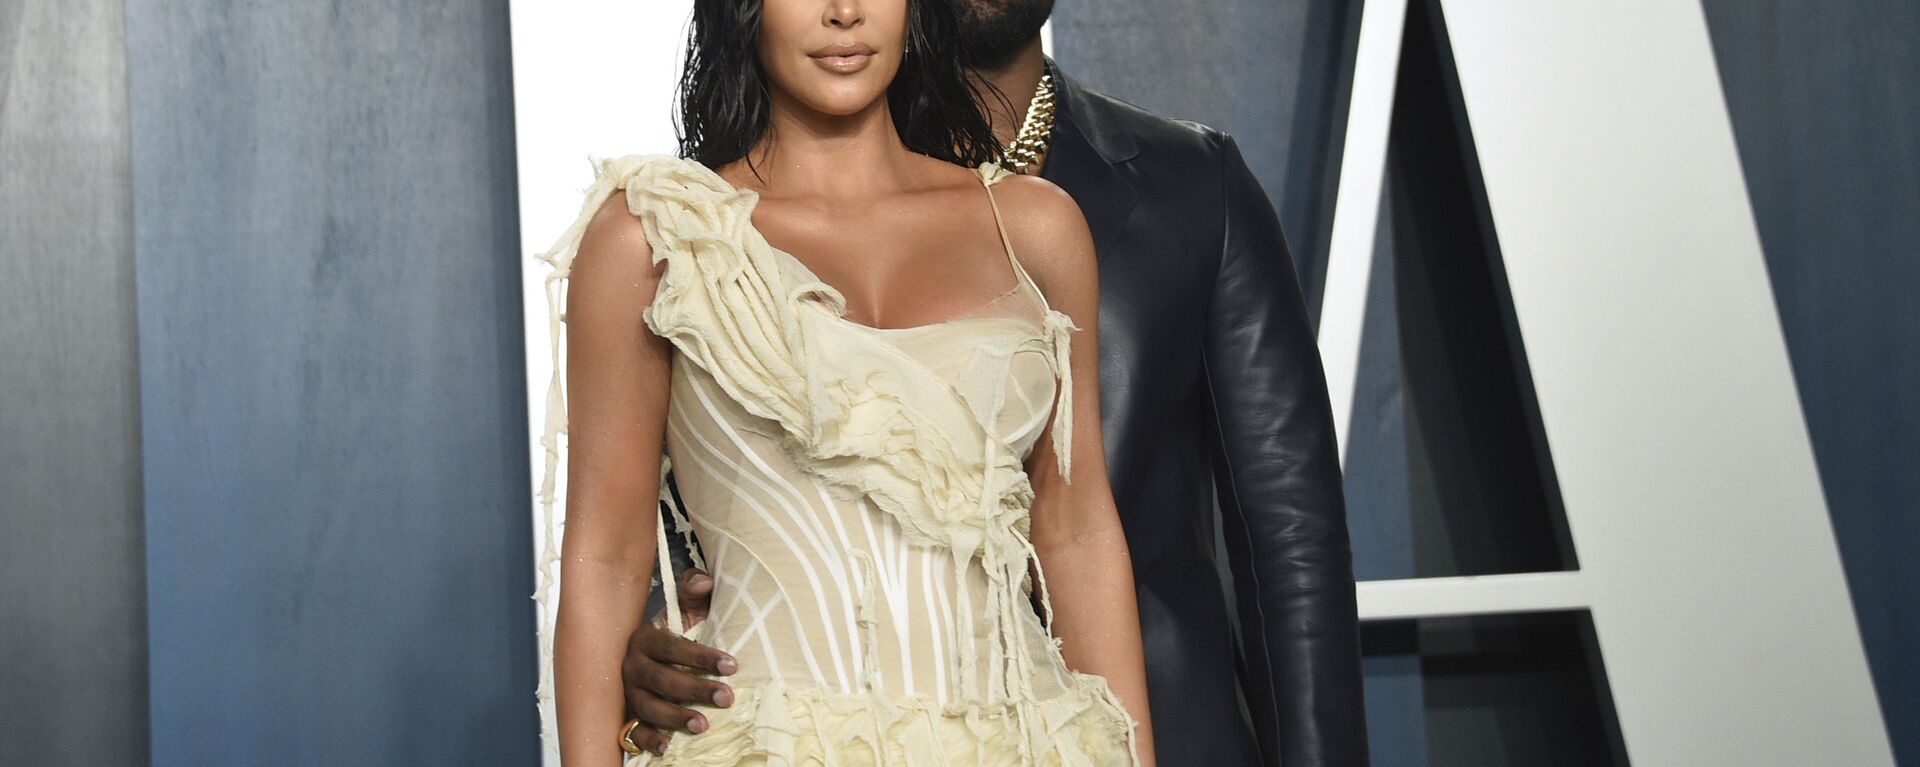 Kim Kardashian, left, and Kanye West arrive at the Vanity Fair Oscar Party on Sunday, Feb. 9, 2020, in Beverly Hills, Calif. - Sputnik International, 1920, 27.11.2021